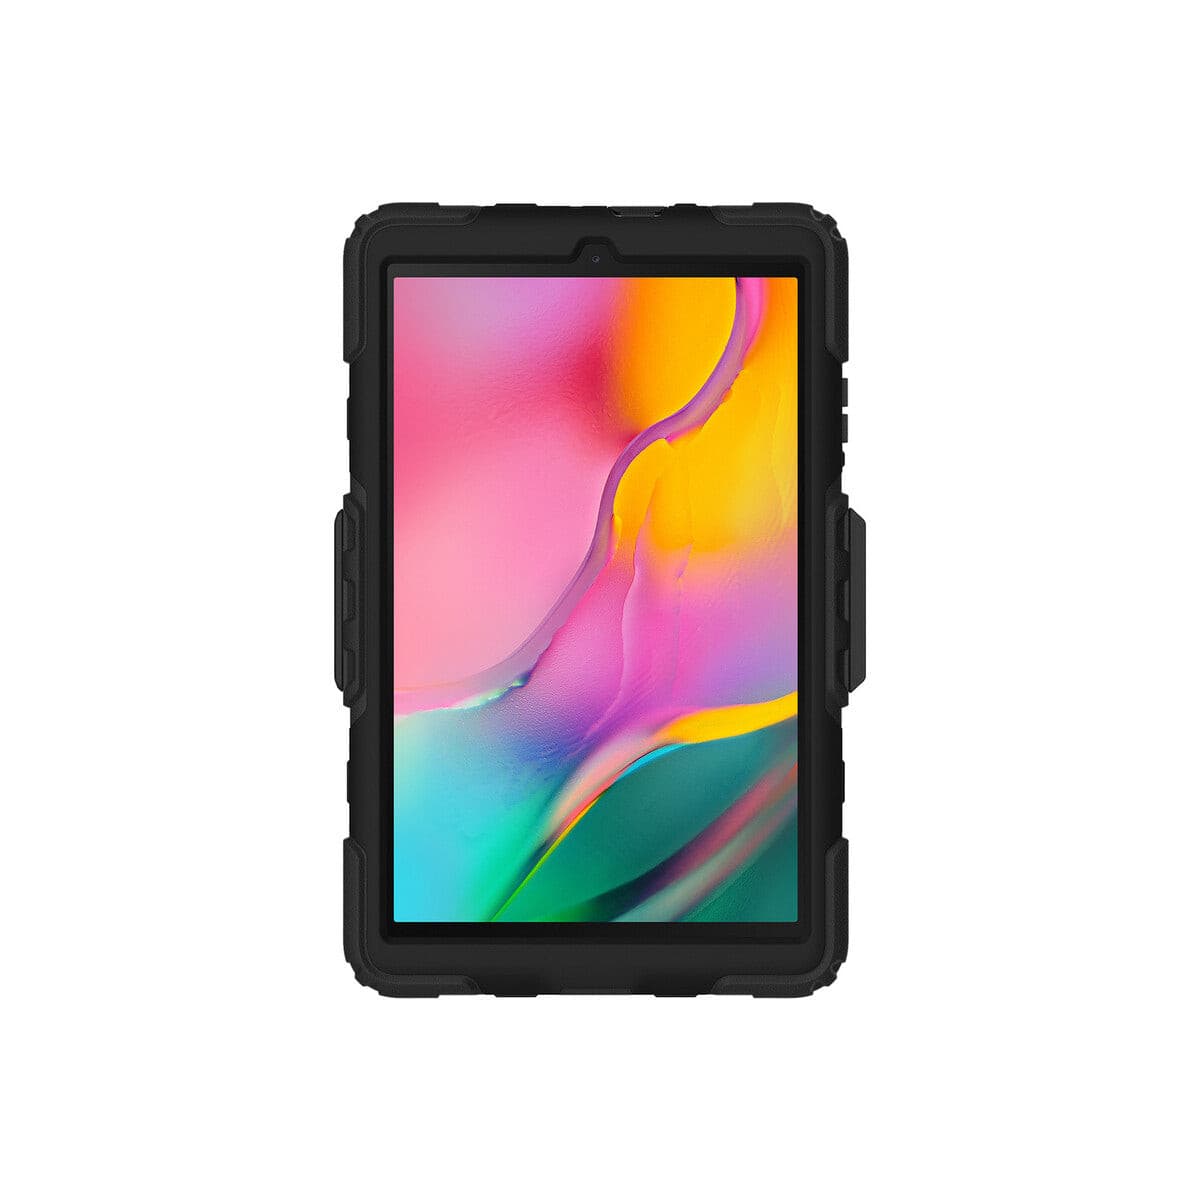 Griffin Survivor All-Terrain for Samsung Galaxy Tab A 10.1 (2019) Rugged Case.